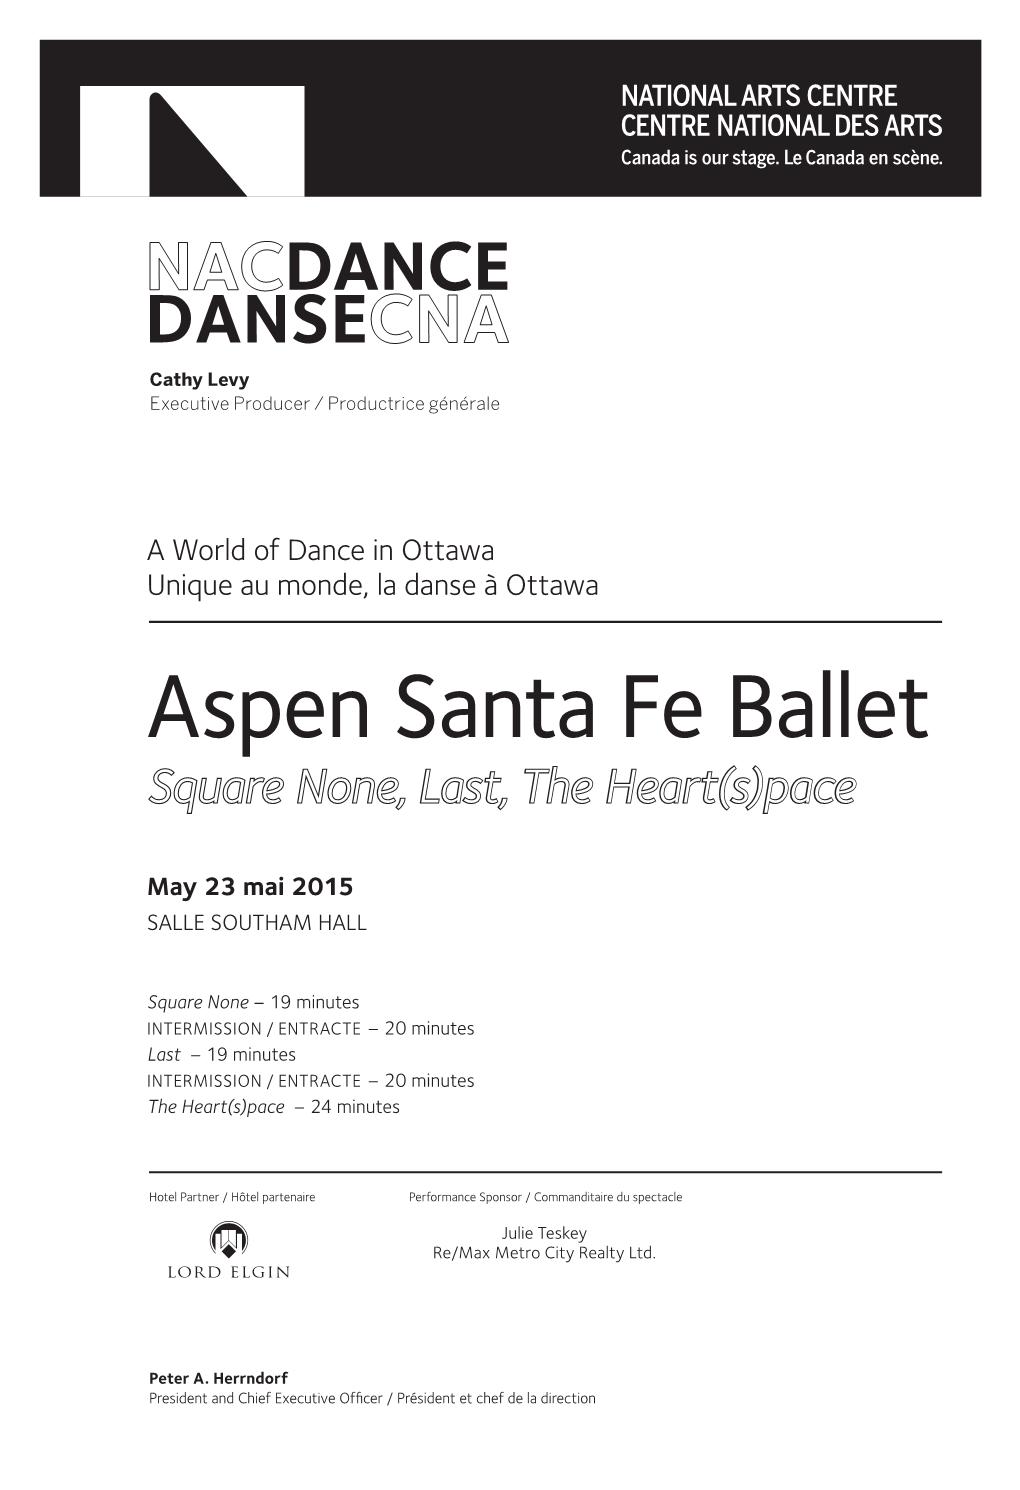 Aspen Santa Fe Ballet Square None, Last, the Heart(S)Pace